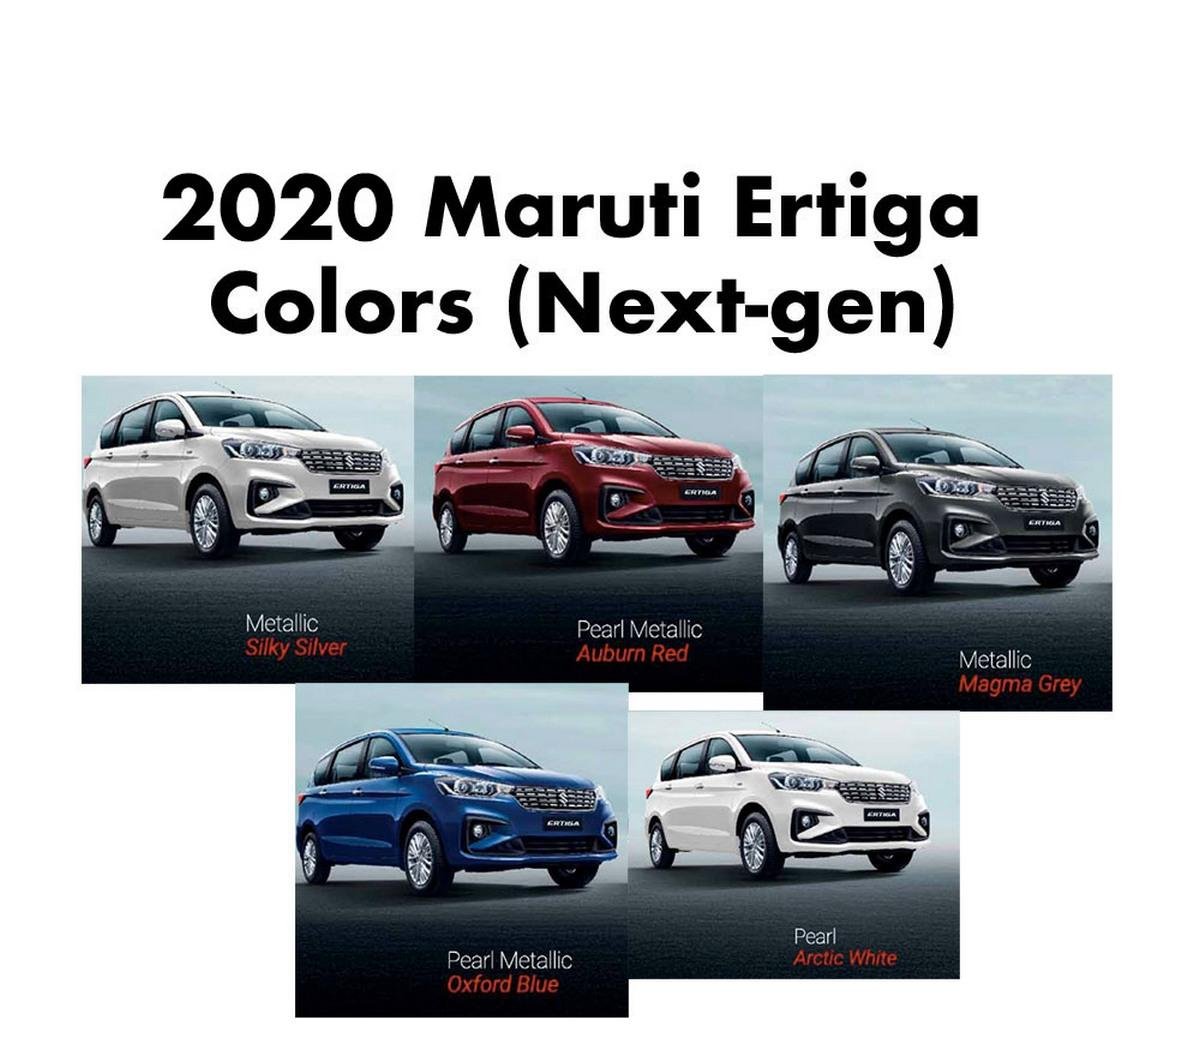 Maruti Ertiga 2020 color options